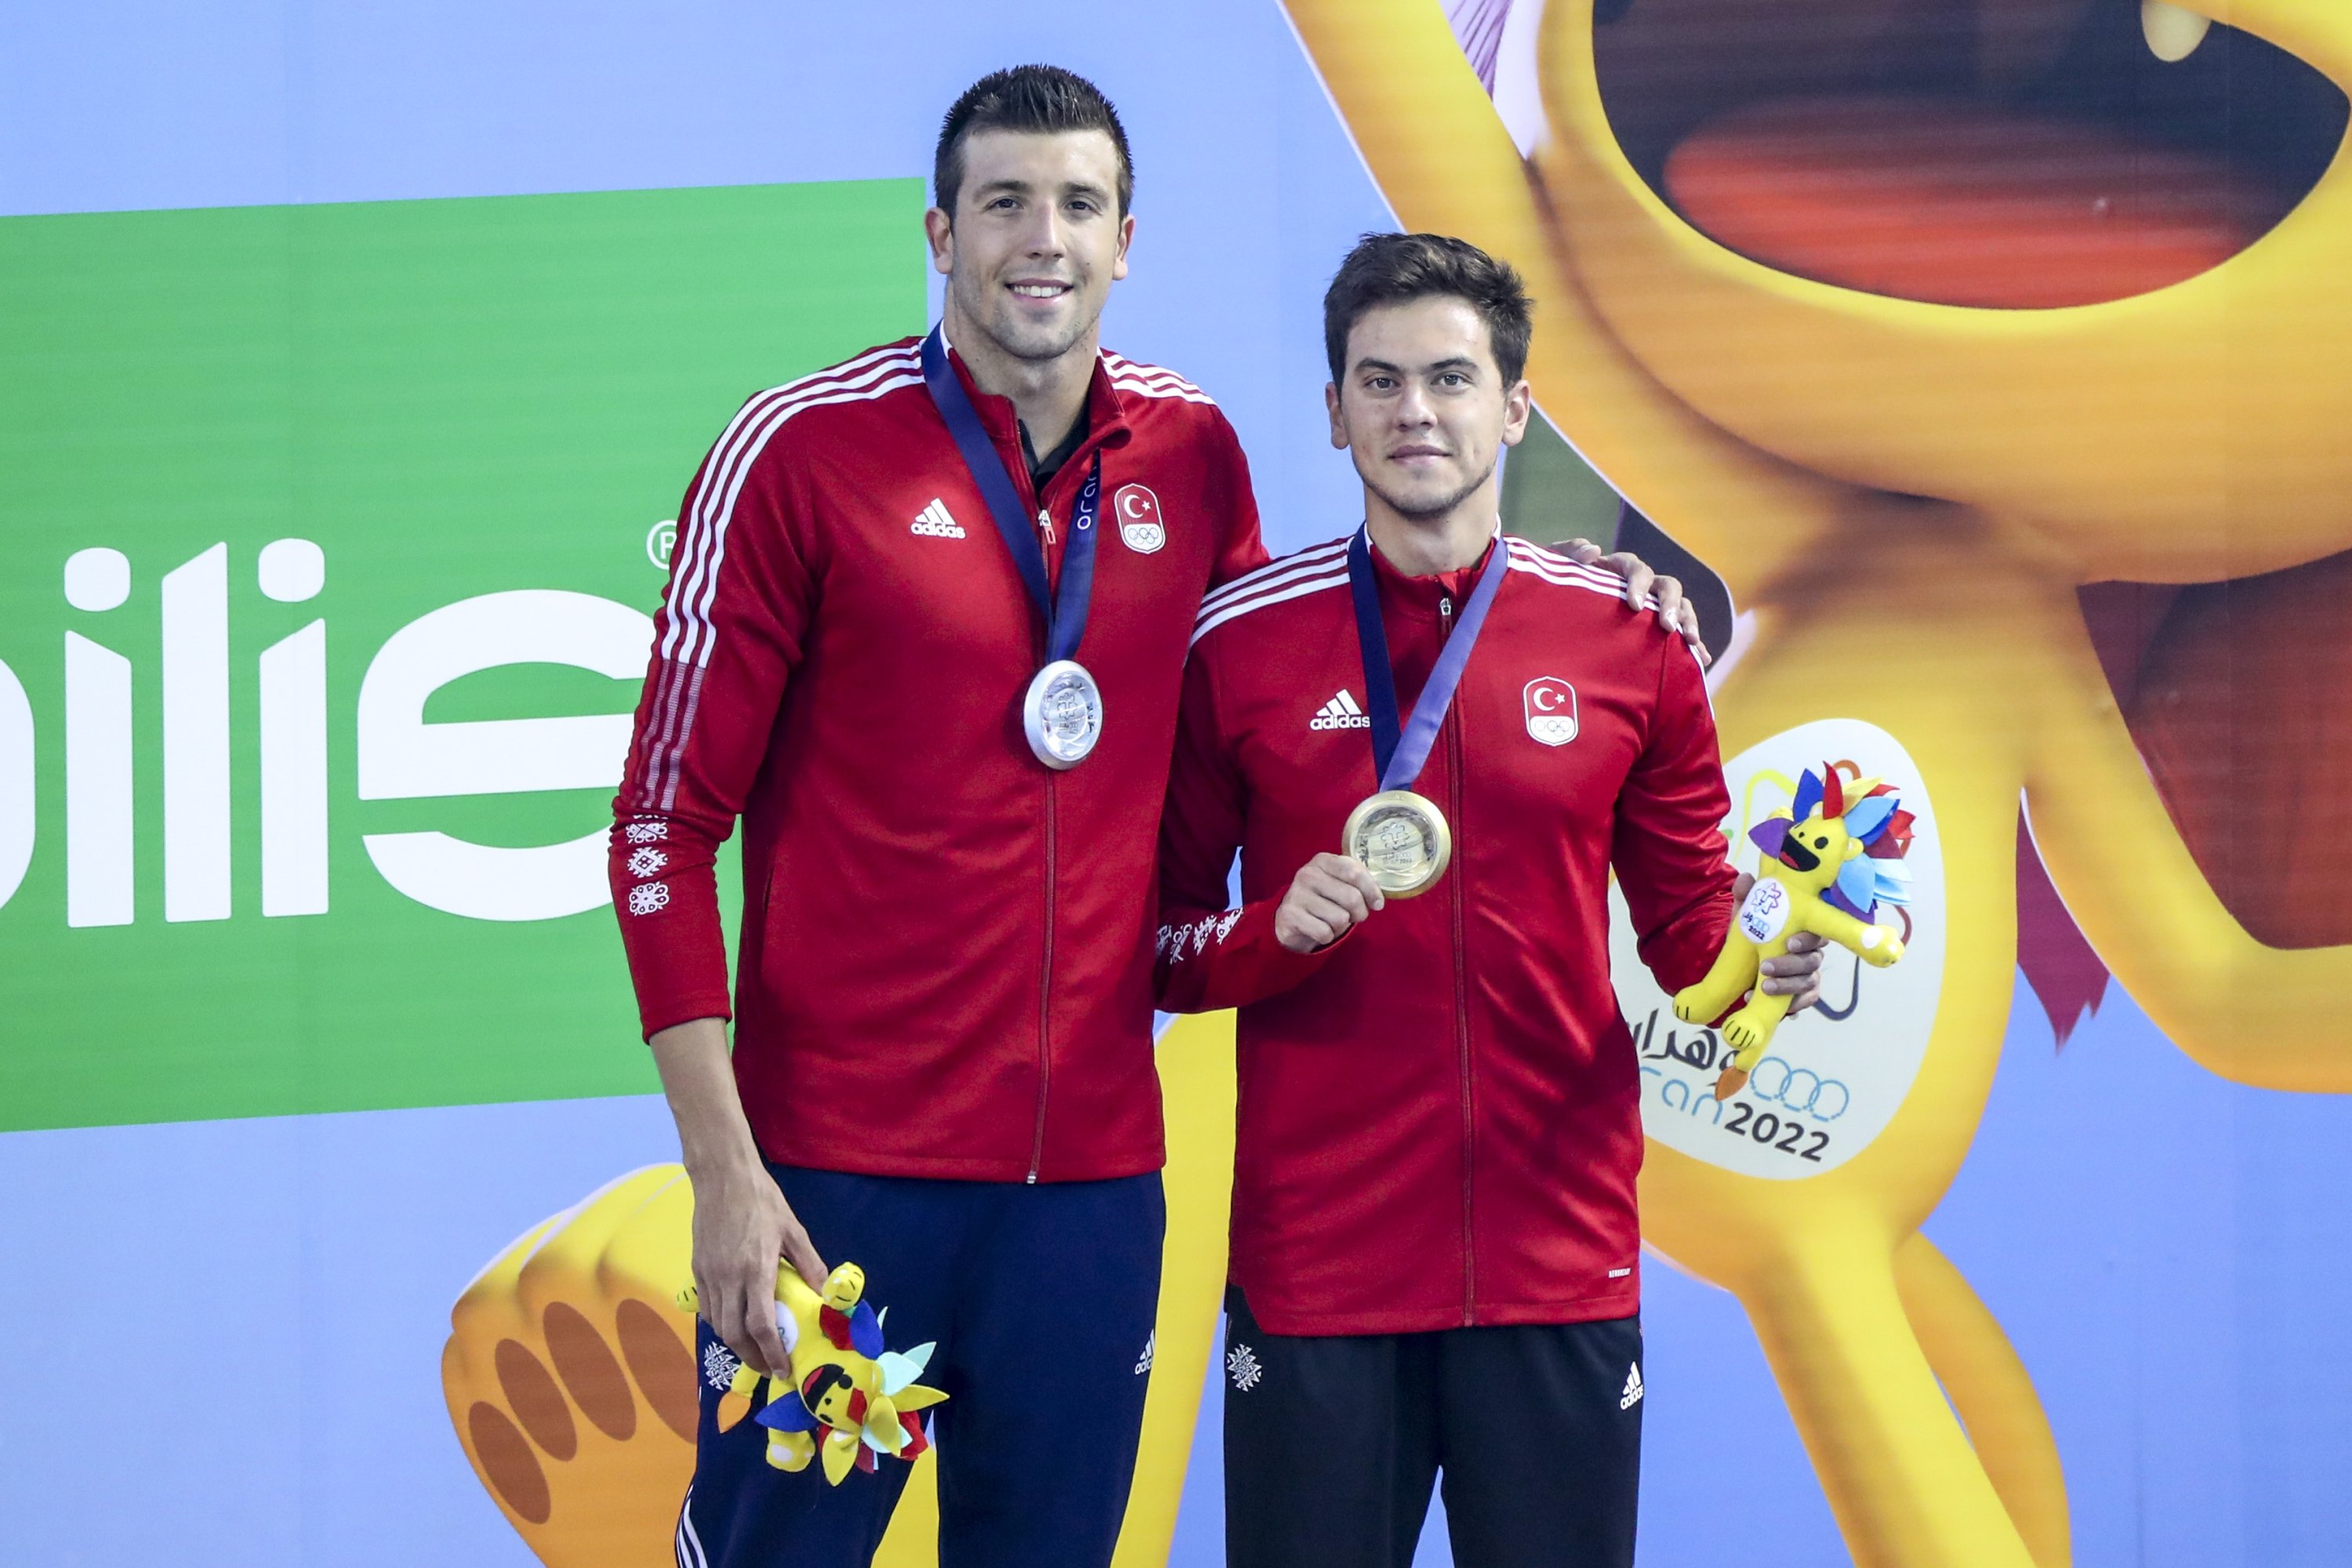 Berkay Ömer Öğretir (R) and Emre Sakçı celebrate after a one-two finish in the men's 100-meter breaststroke event at the Med Games, Oran, Algeria July 5, 2022. (AA Photo)